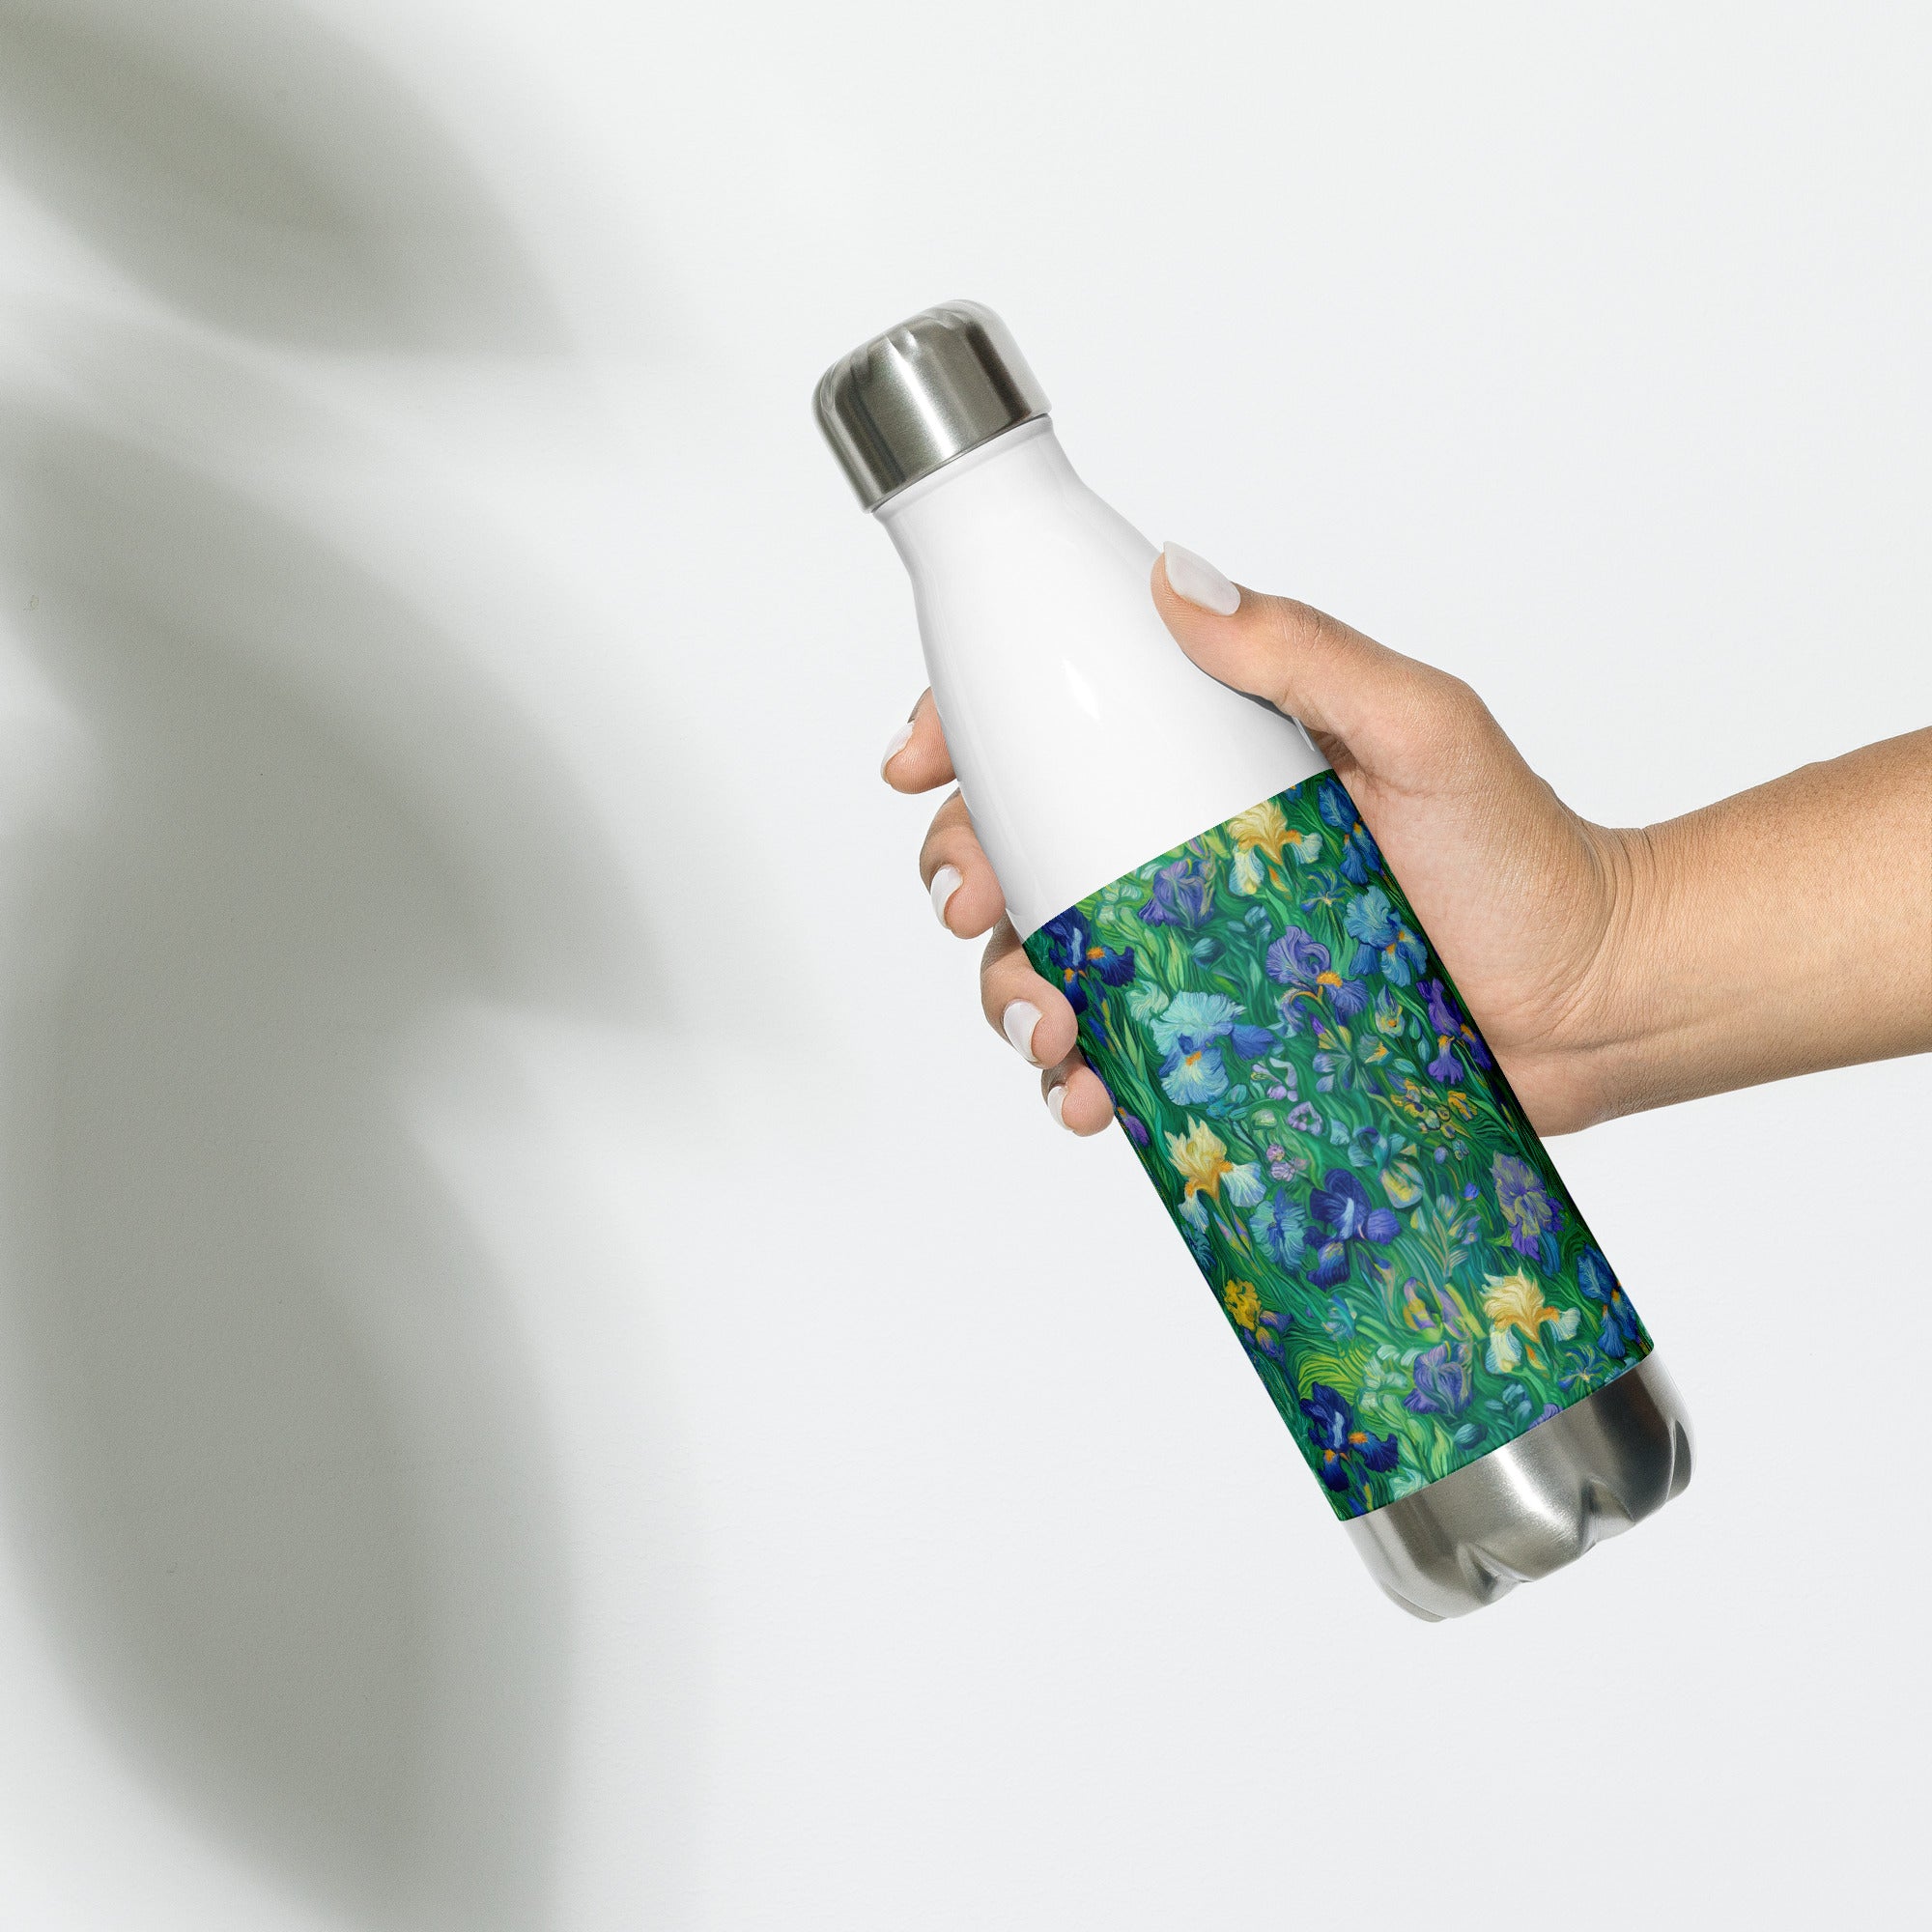 Vincent van Gogh 'Irises' Famous Painting Water Bottle | Stainless Steel Art Water Bottle